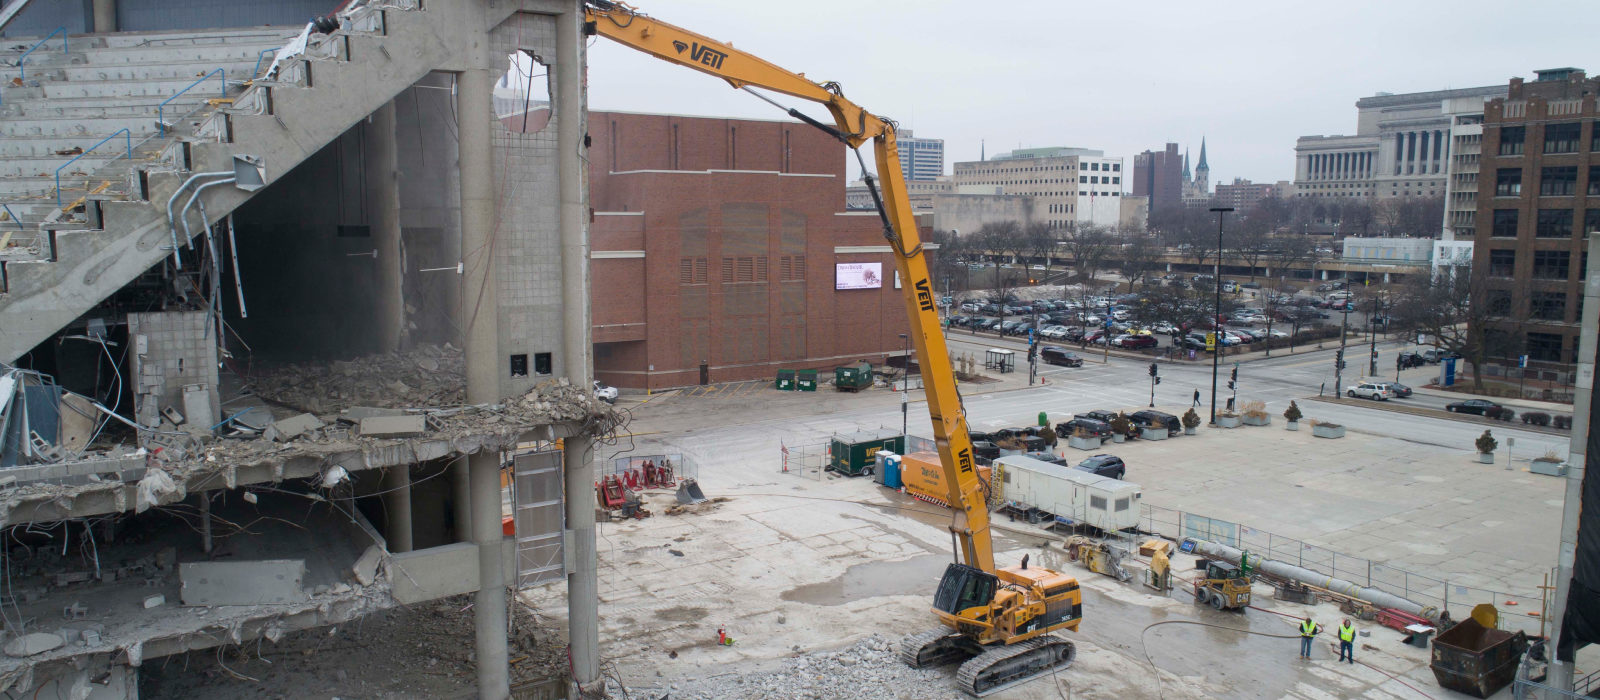 Excavator Destroying Bradley Center Building